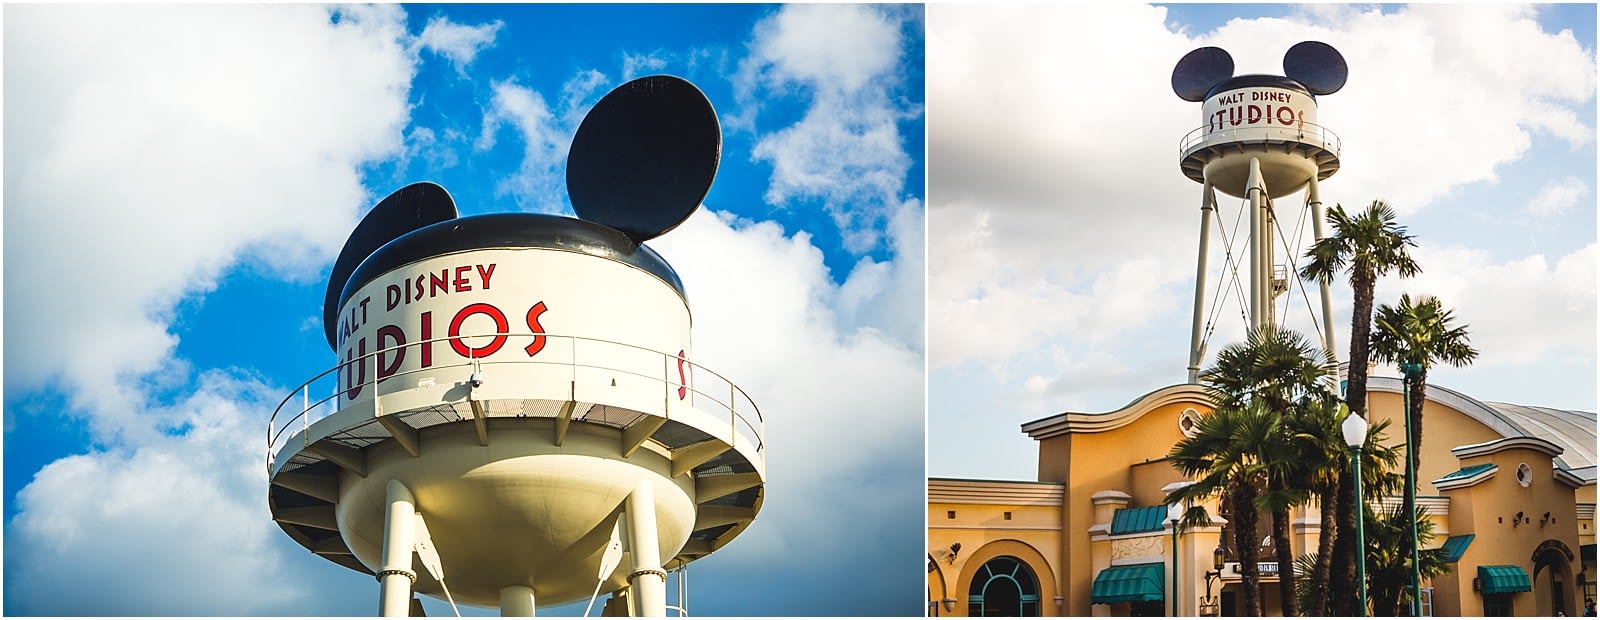 Disneyland-Paris-Walt-Disney-Studios.jpg